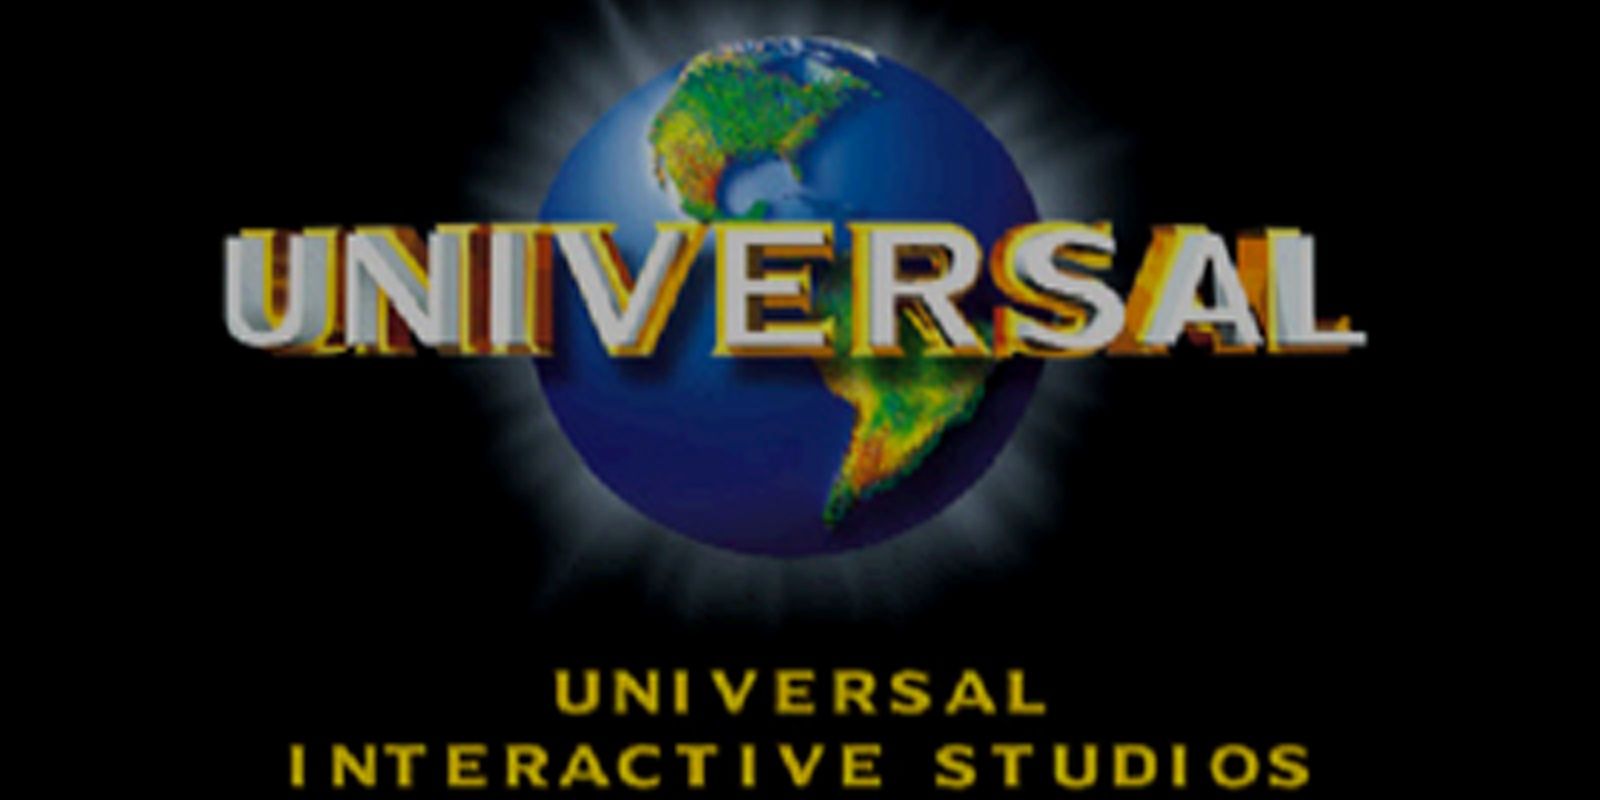 The logo for Universal Interactive Studios.